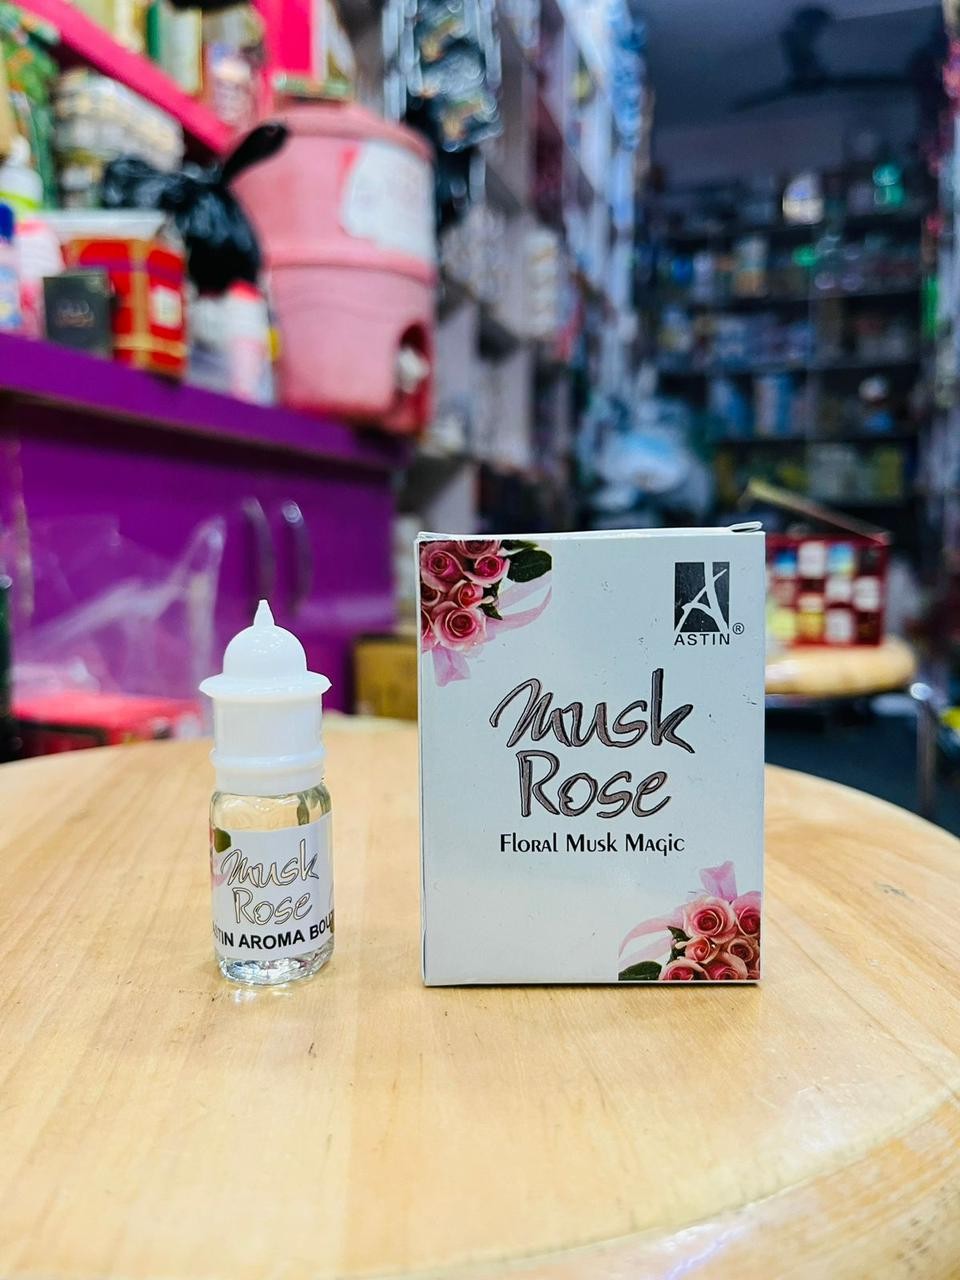 ASTIN musk rose floral musk magic alcohol-free perfume attar